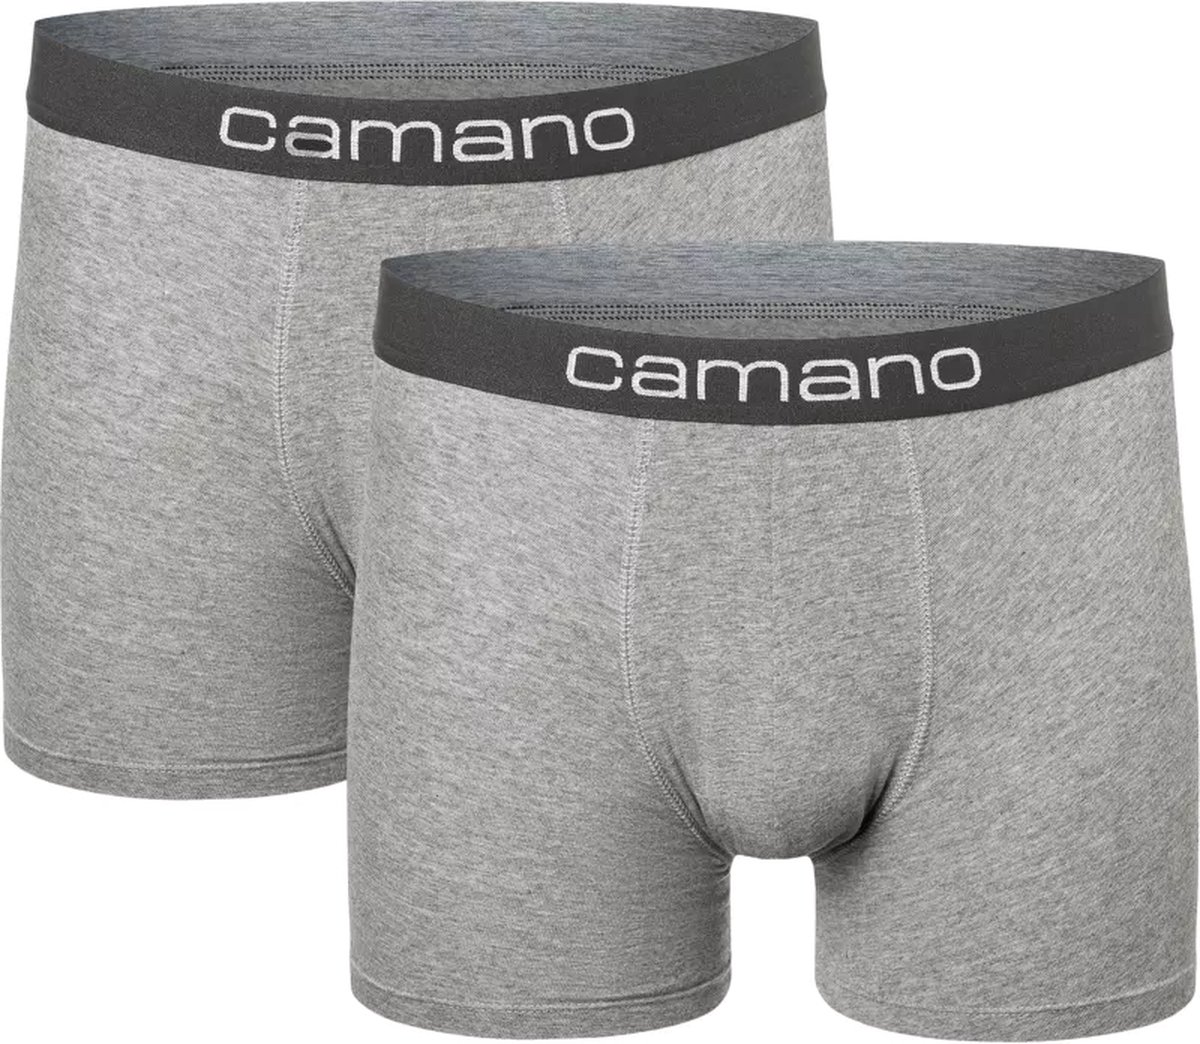 Camano - Boxershorts - High Comfort - Katoen - Stretch - Top Boxers - Grijs melange - M